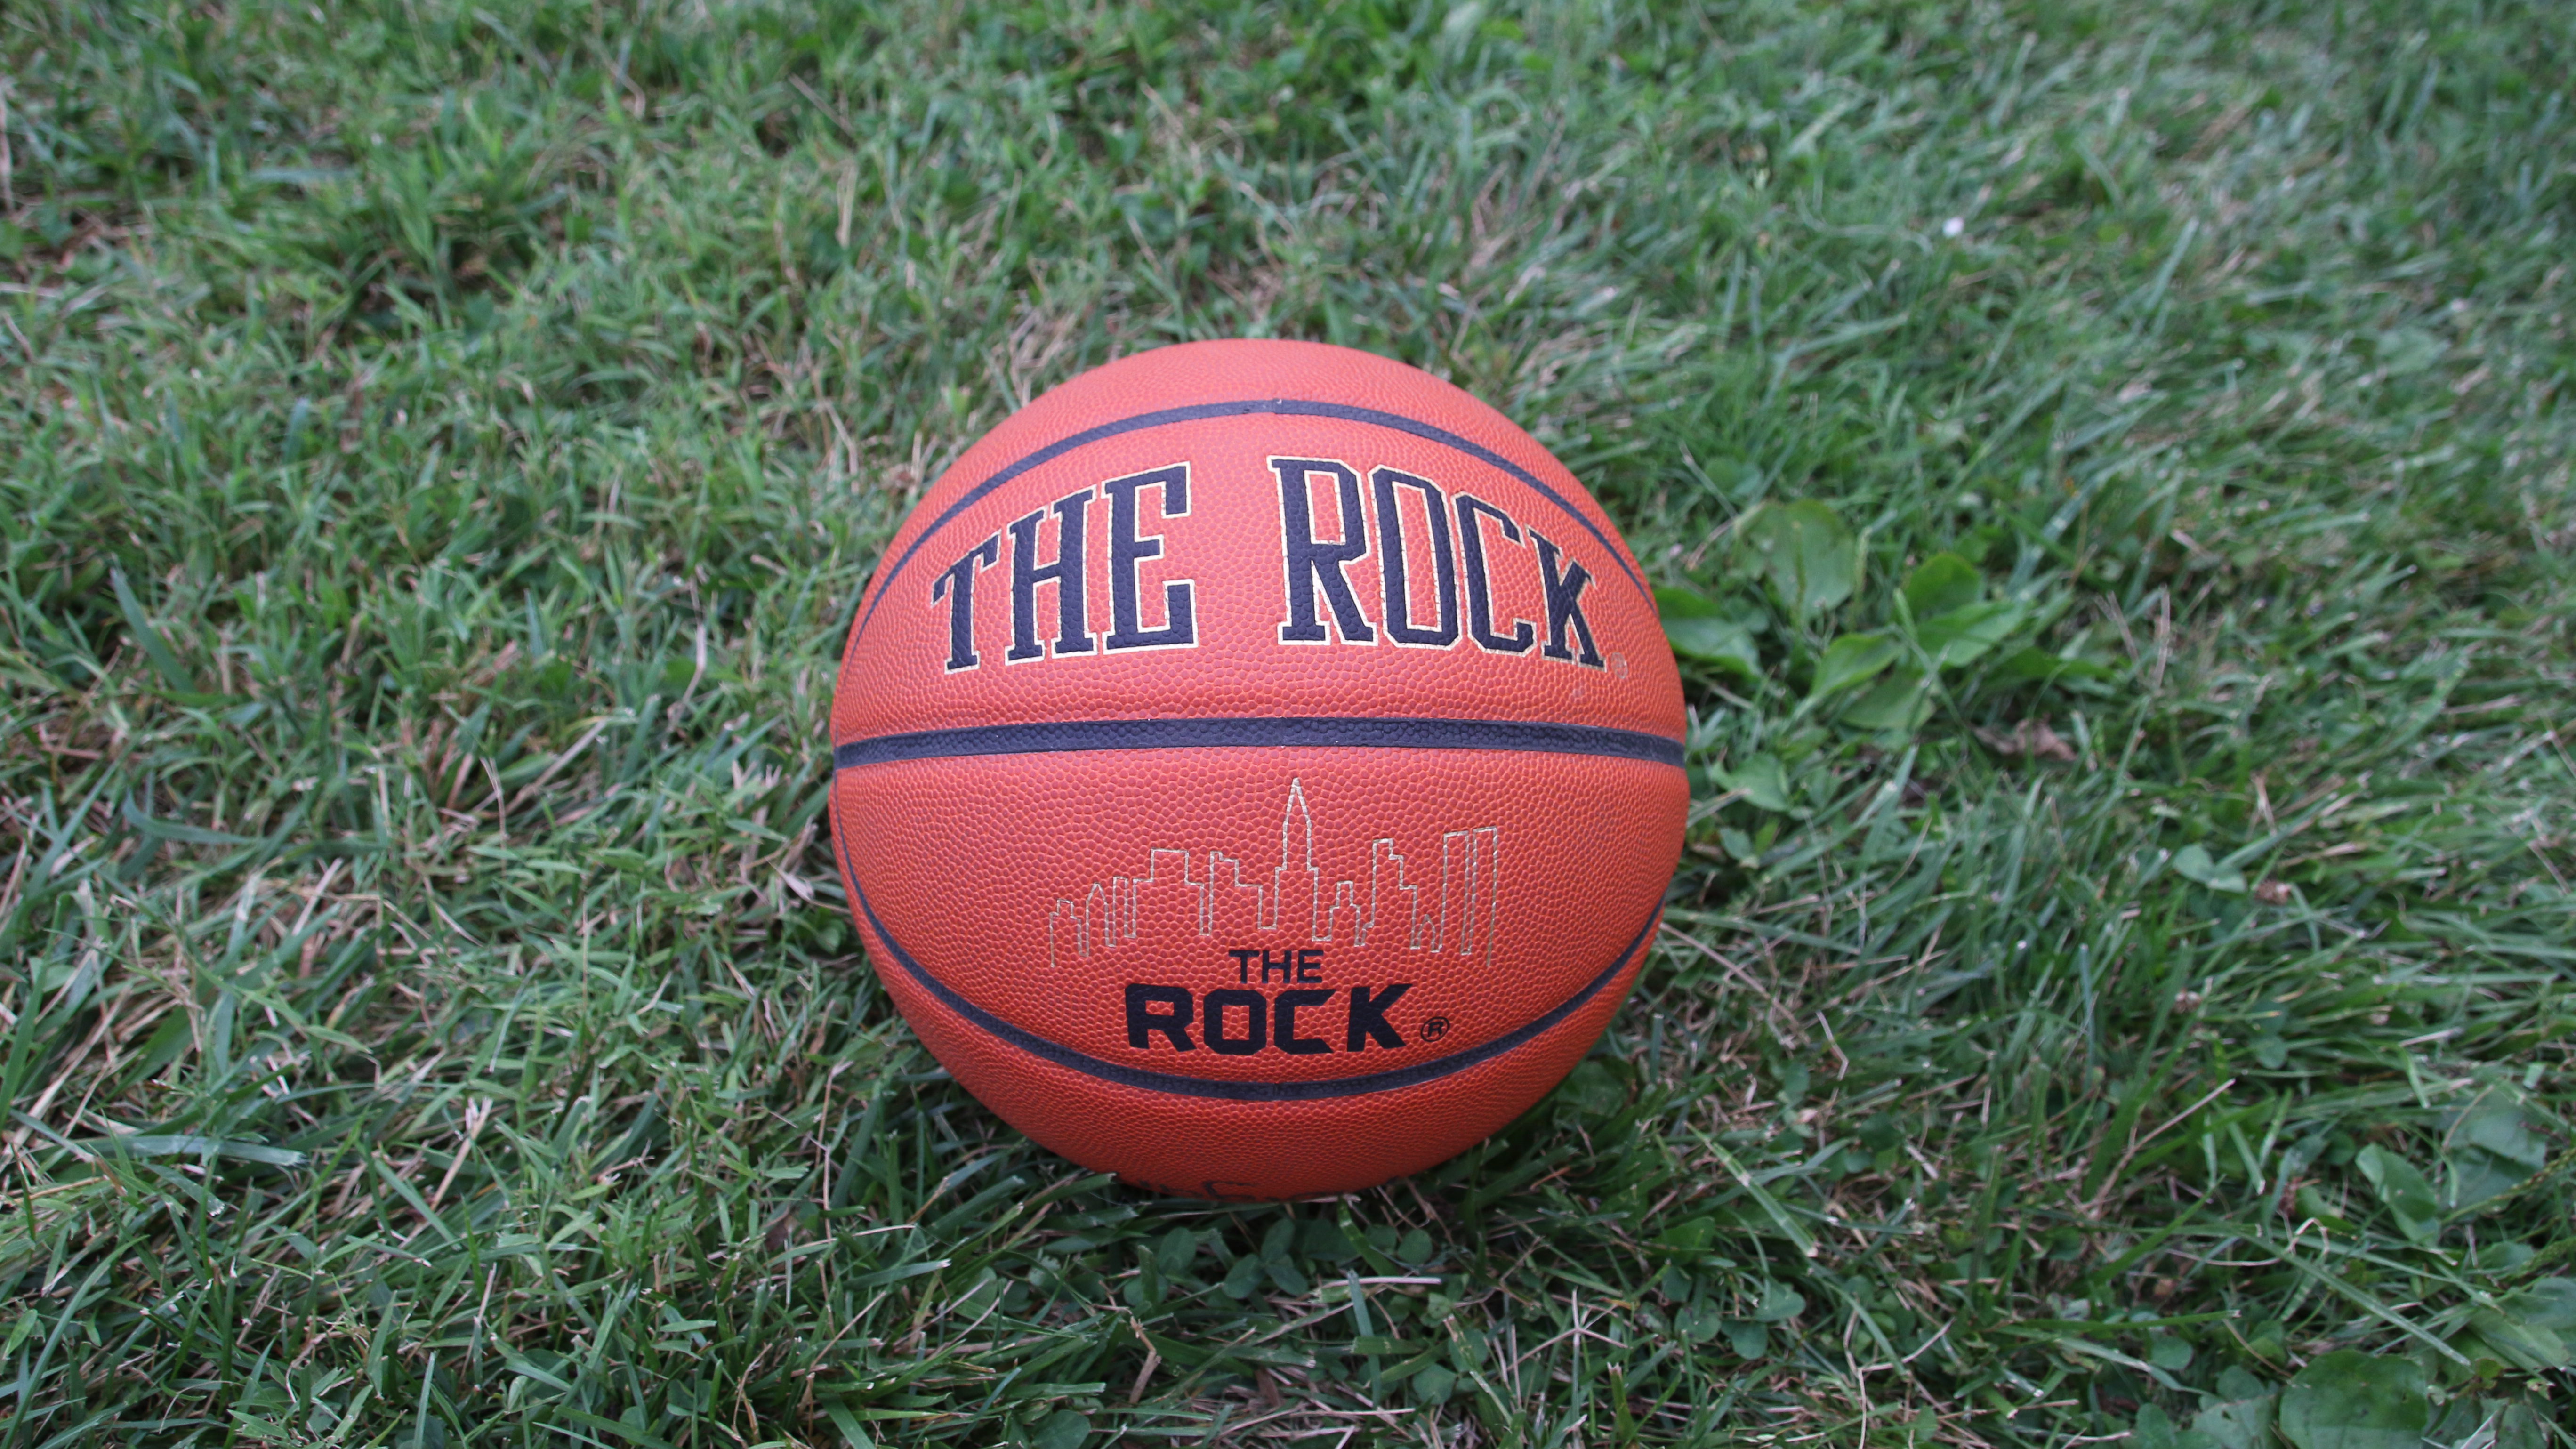 The Rock basketball